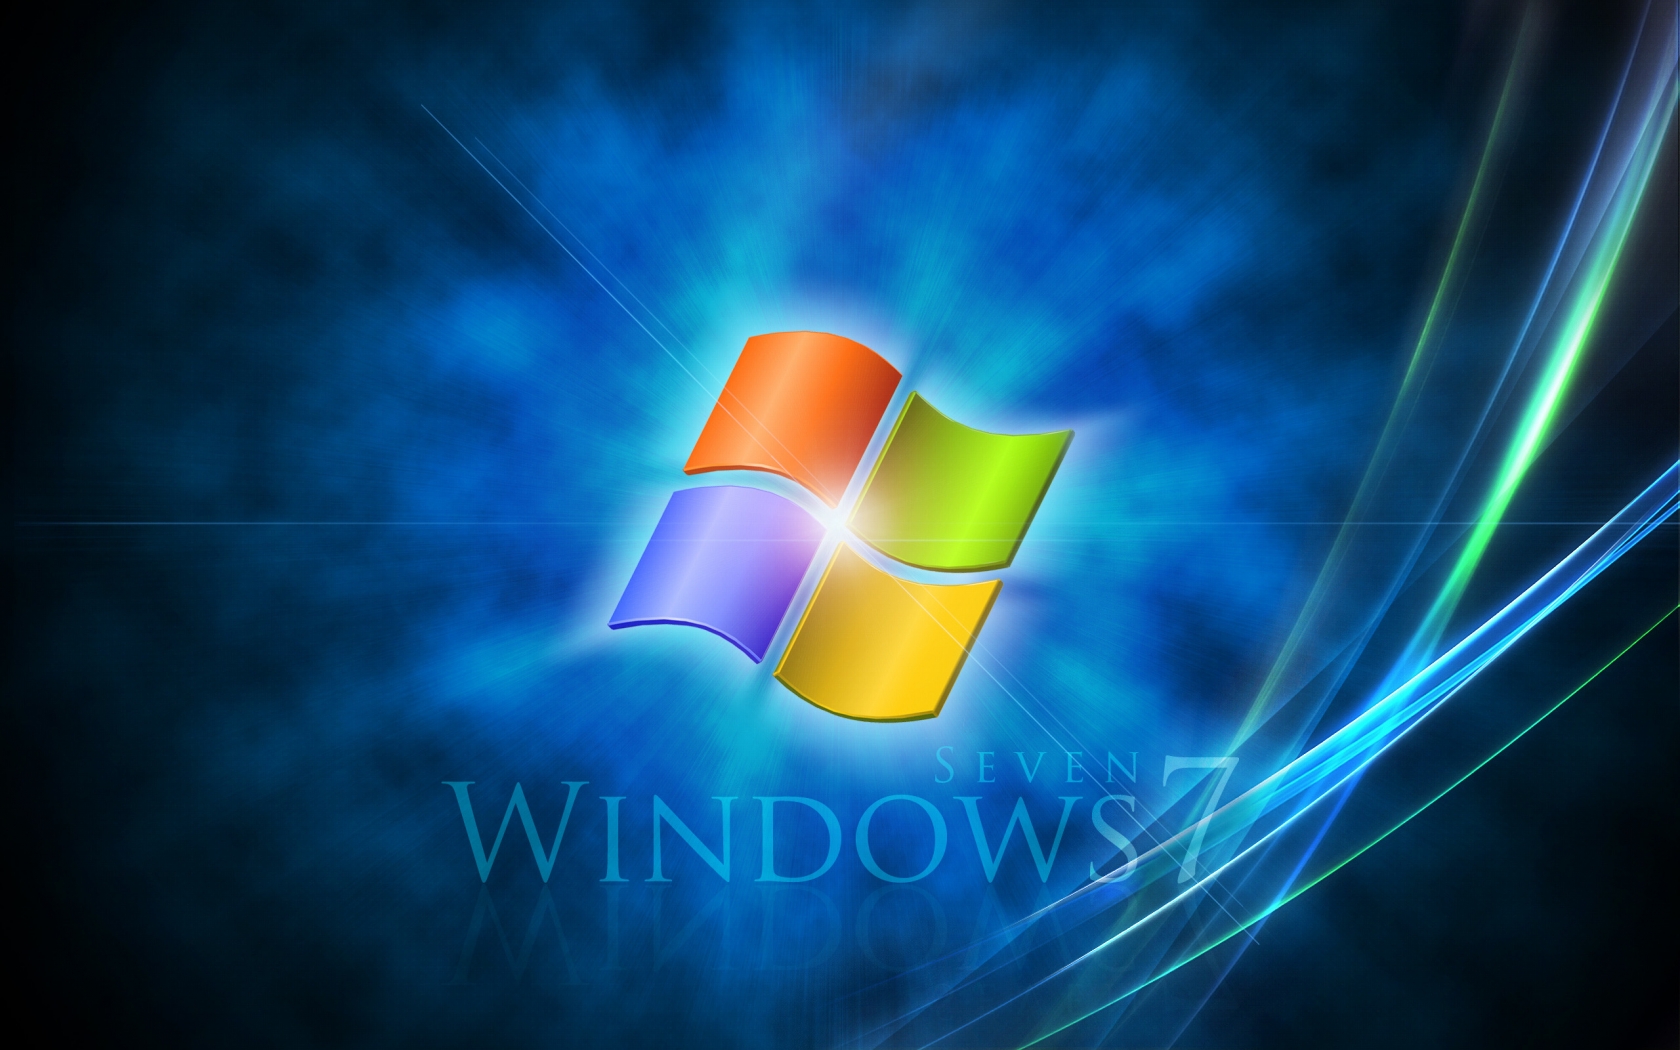 Windows 7 Light Rays for 1680 x 1050 widescreen resolution